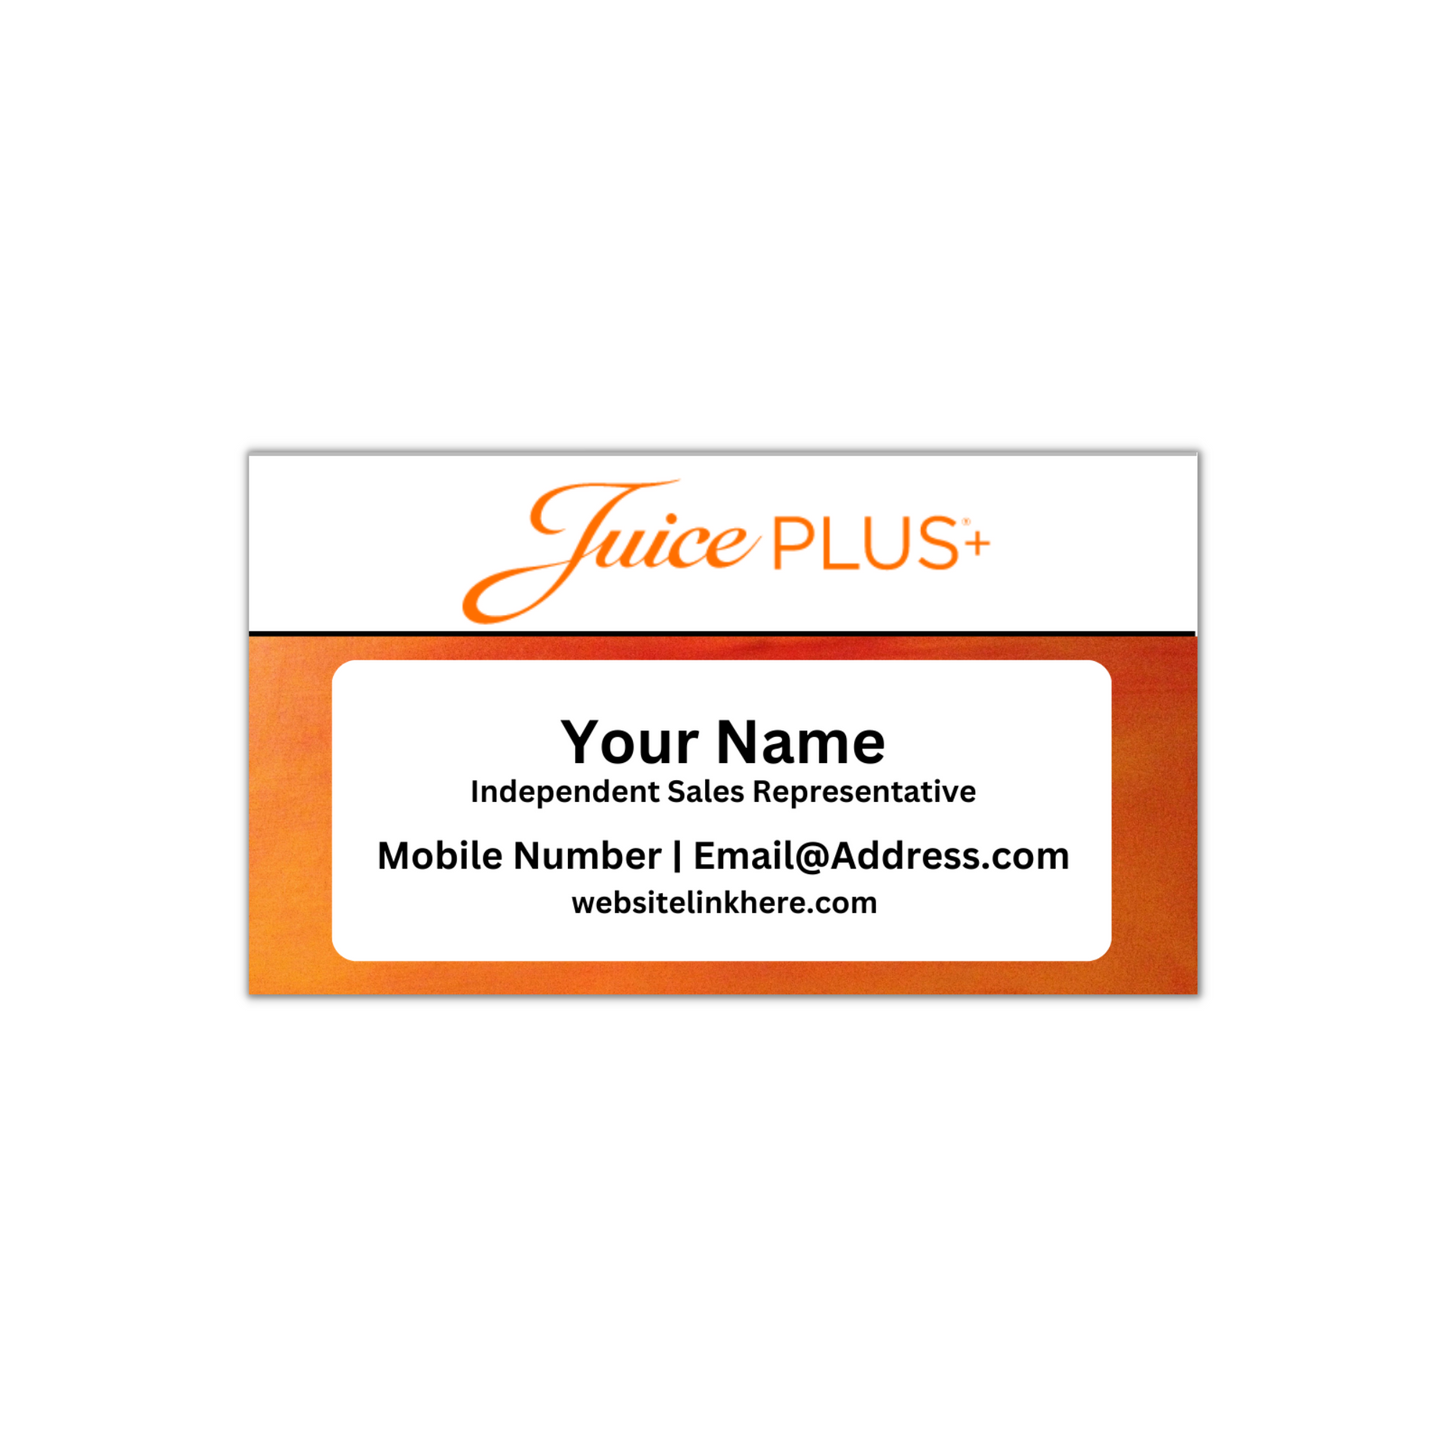 Juice Plus Business Card - Independent Representatives / Network Marketing